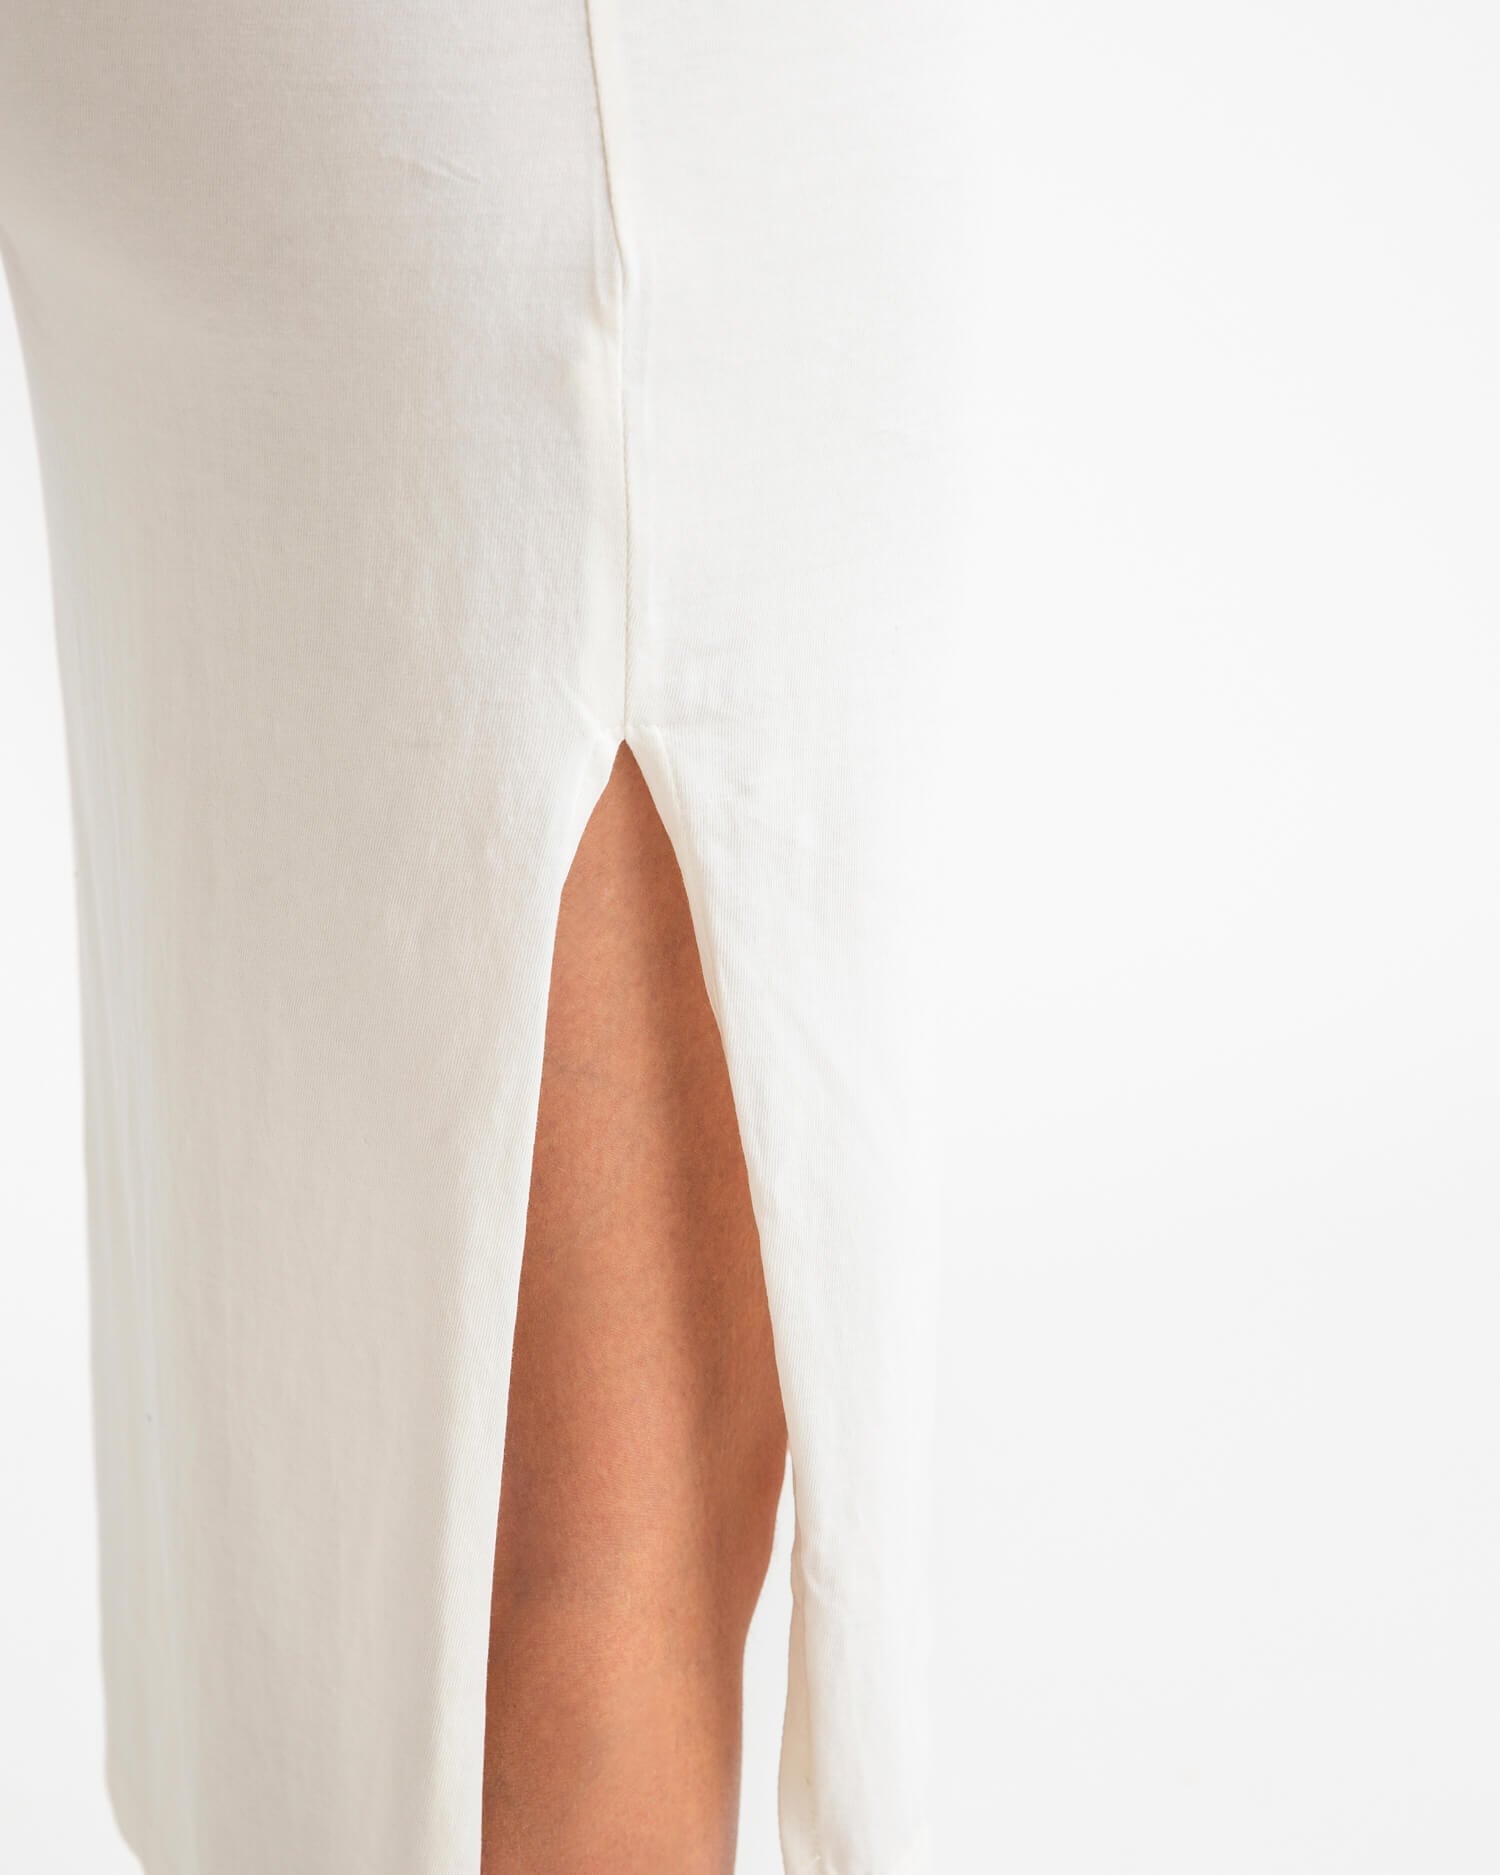 White, short-sleeved dress made of organic cotton from Matona